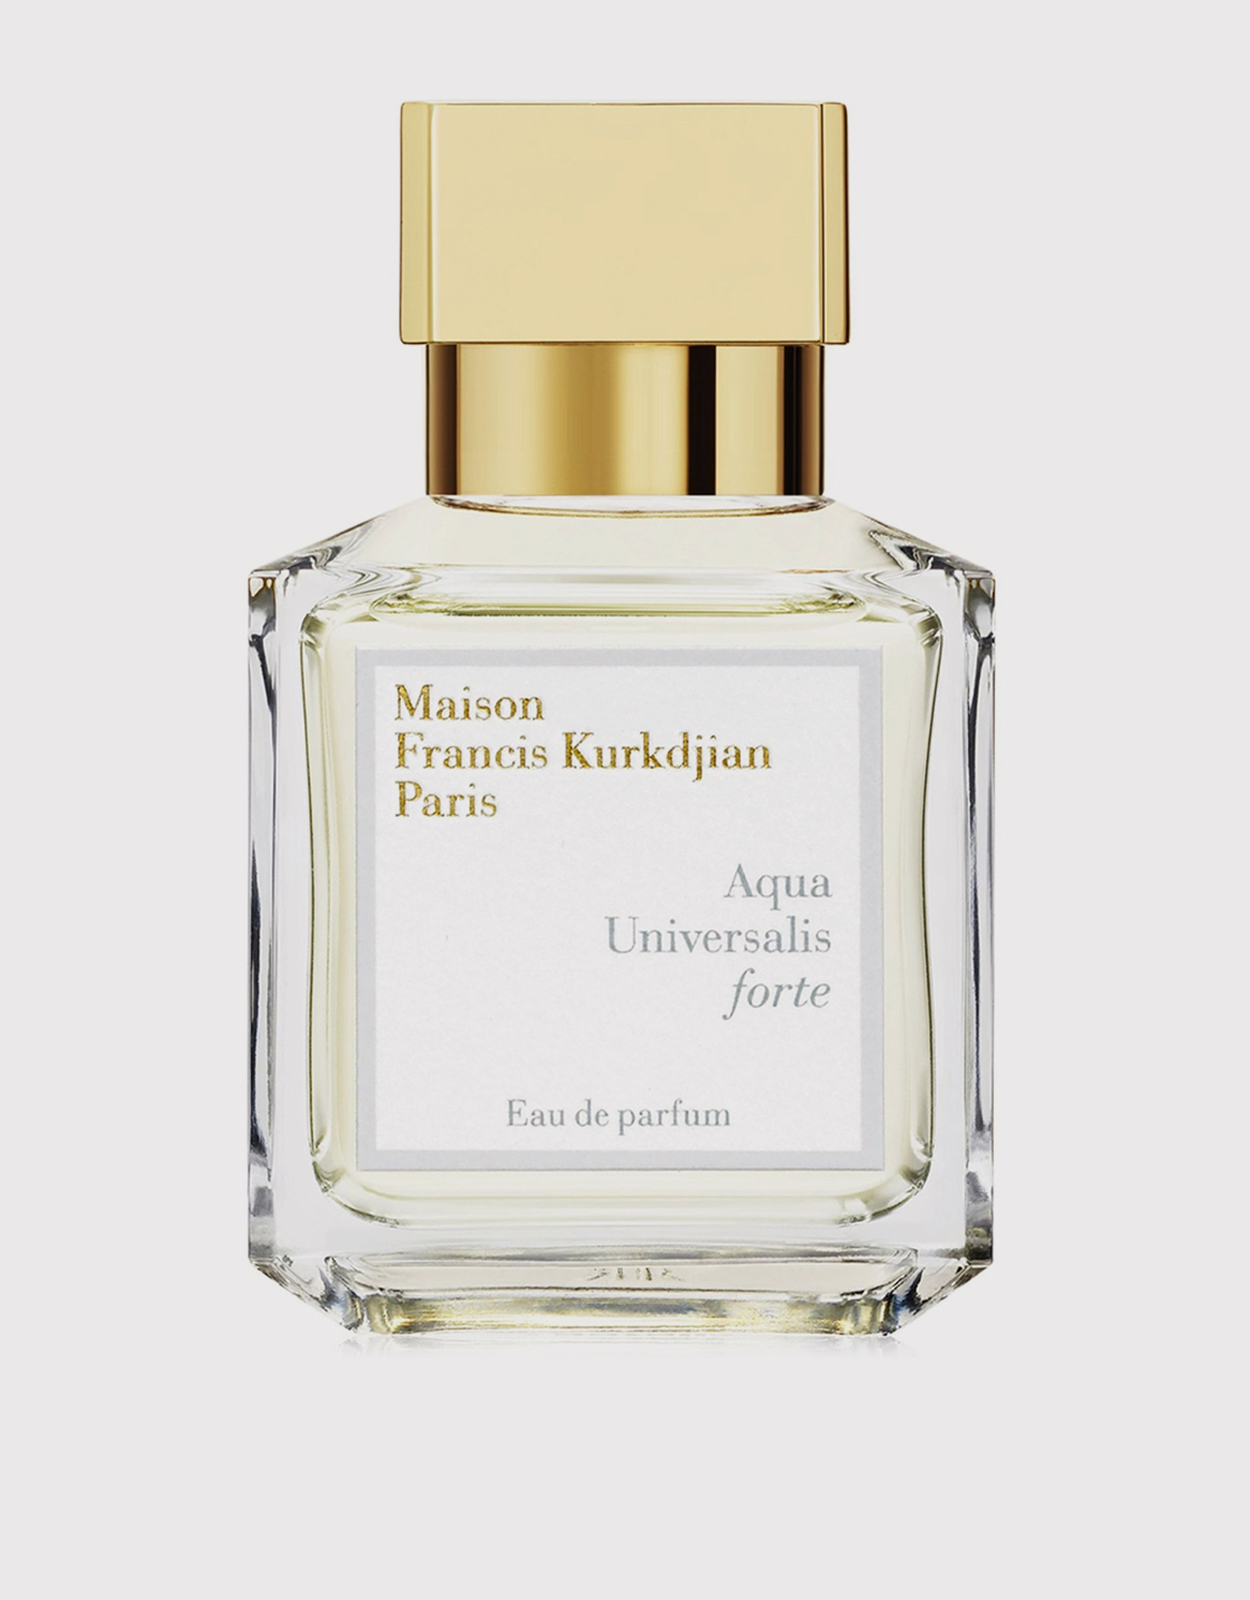 Maison Francis Kurkdjian | Aqua Universalis forte Unisex Eau de Parfum 70ml  | Fragrance | IFCHIC.COM